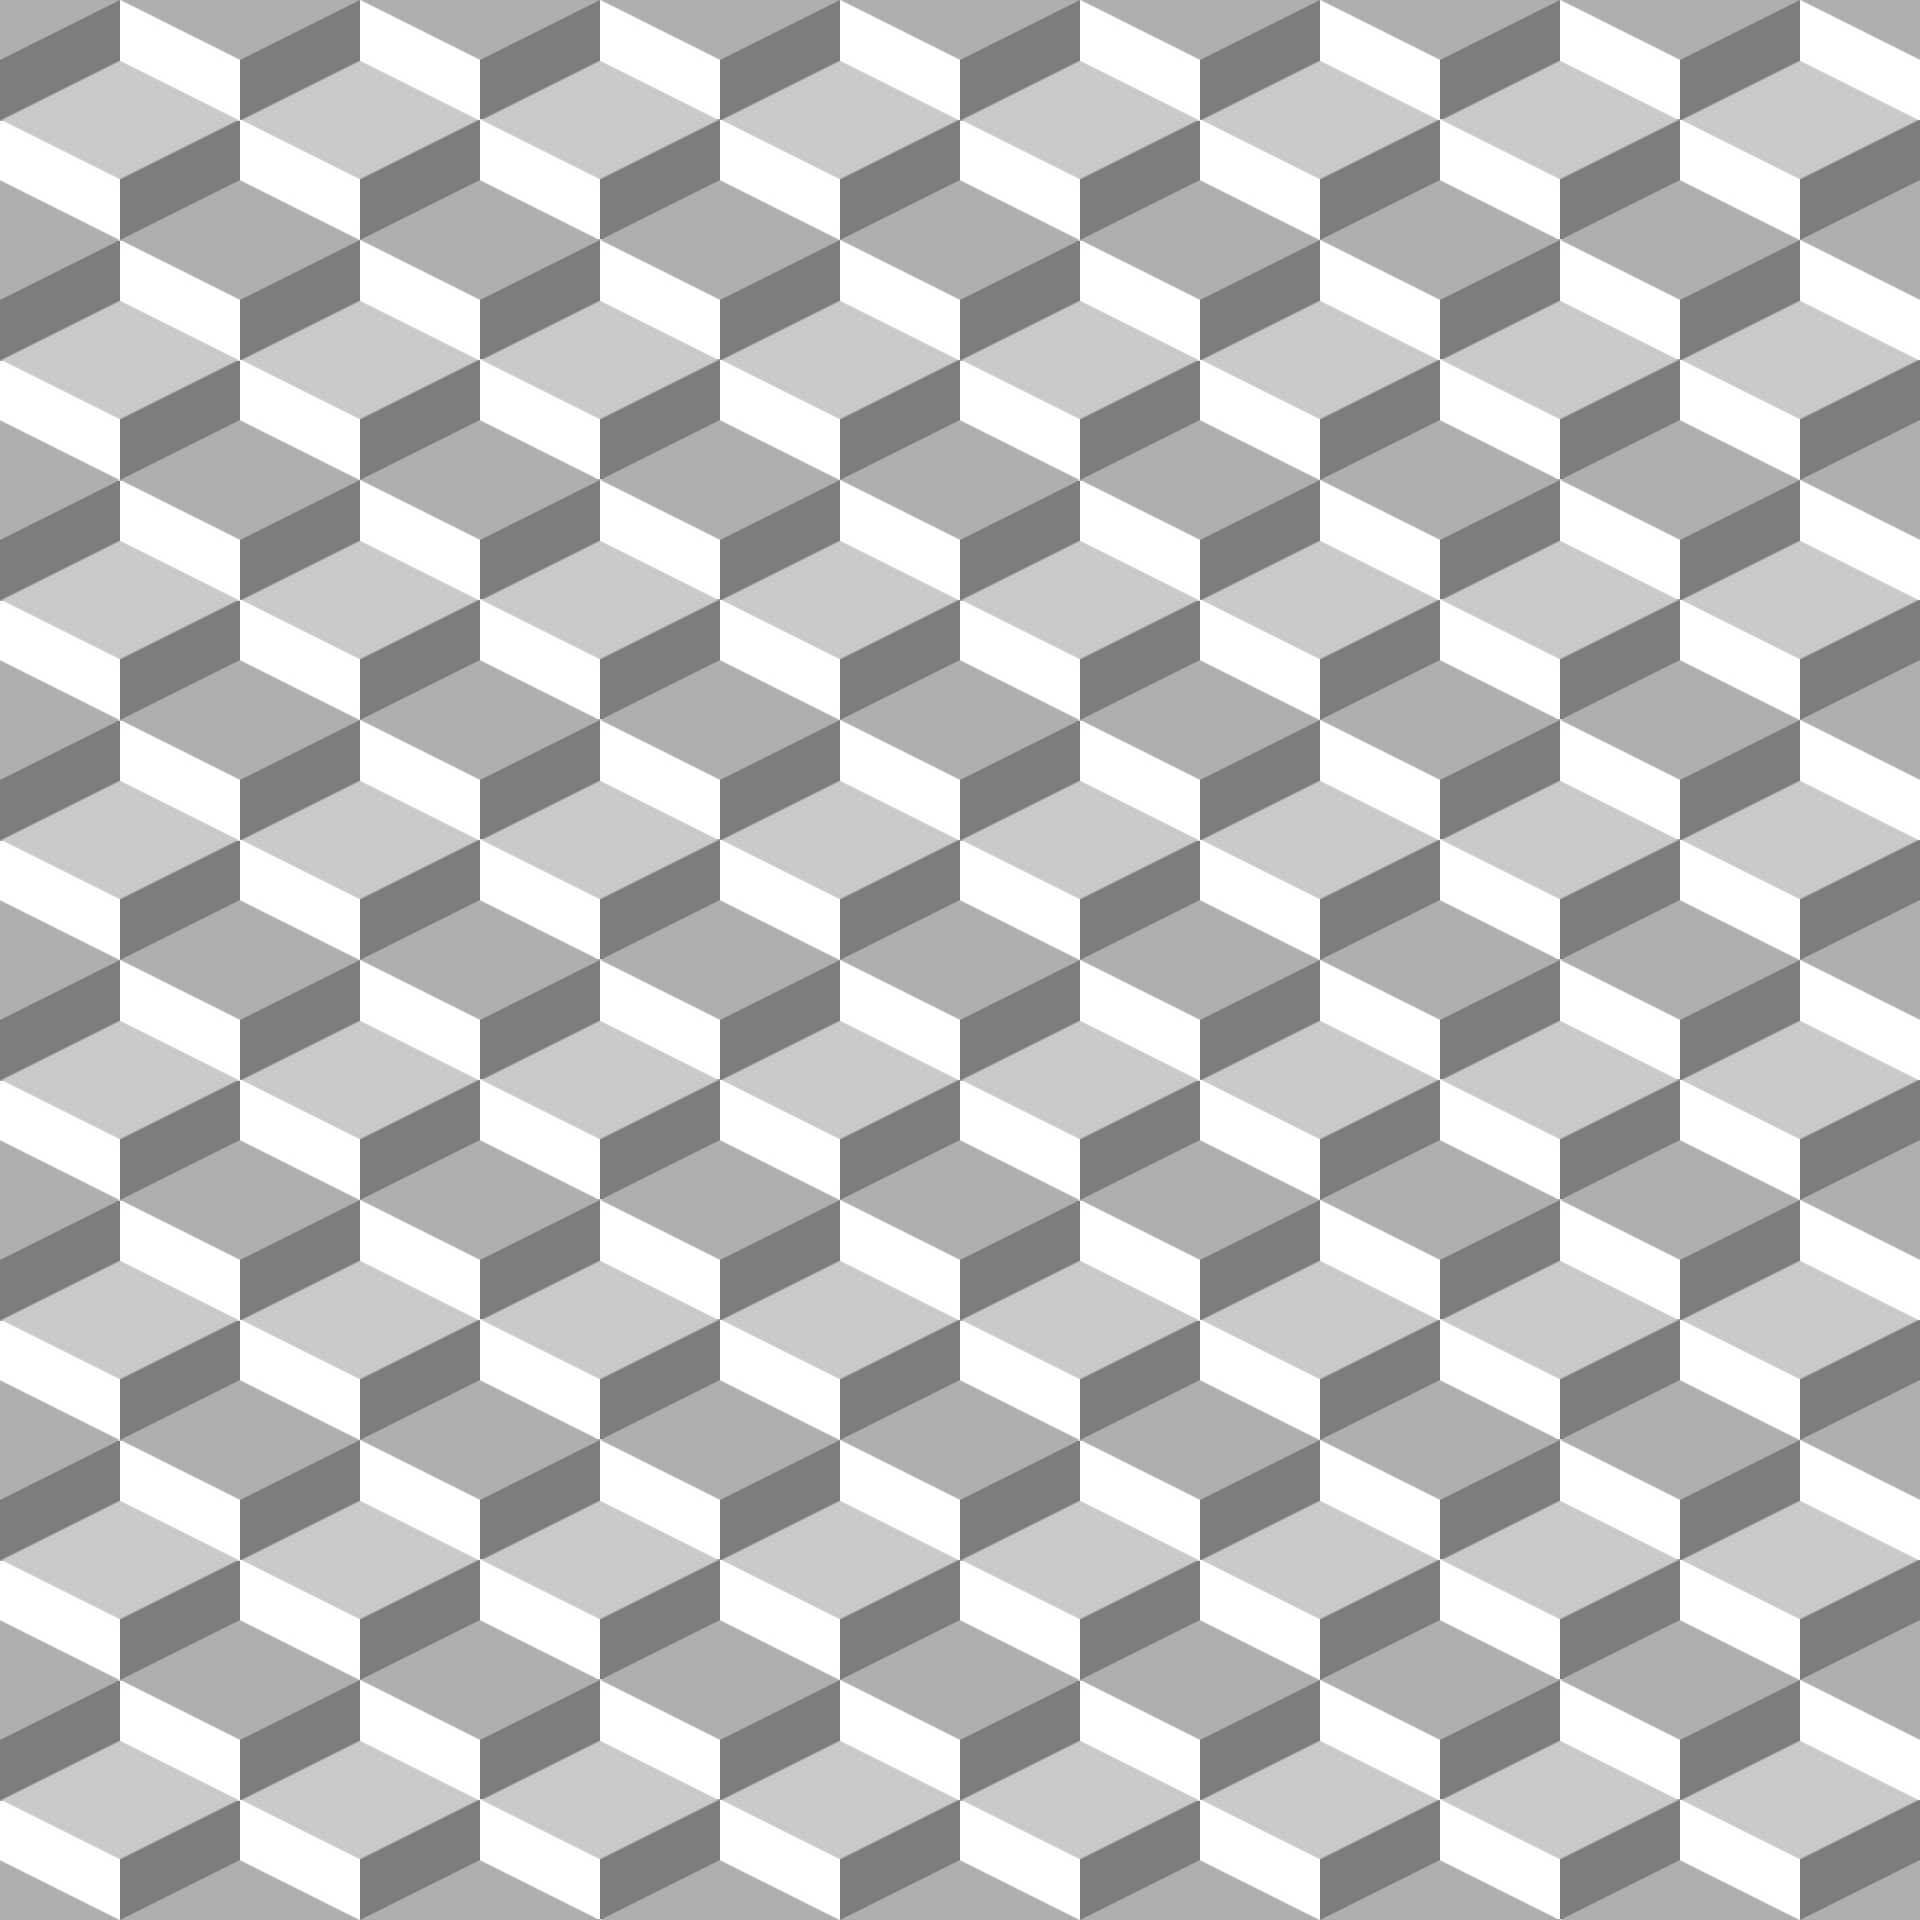 geometric shapes wallpaper no repeat pattern